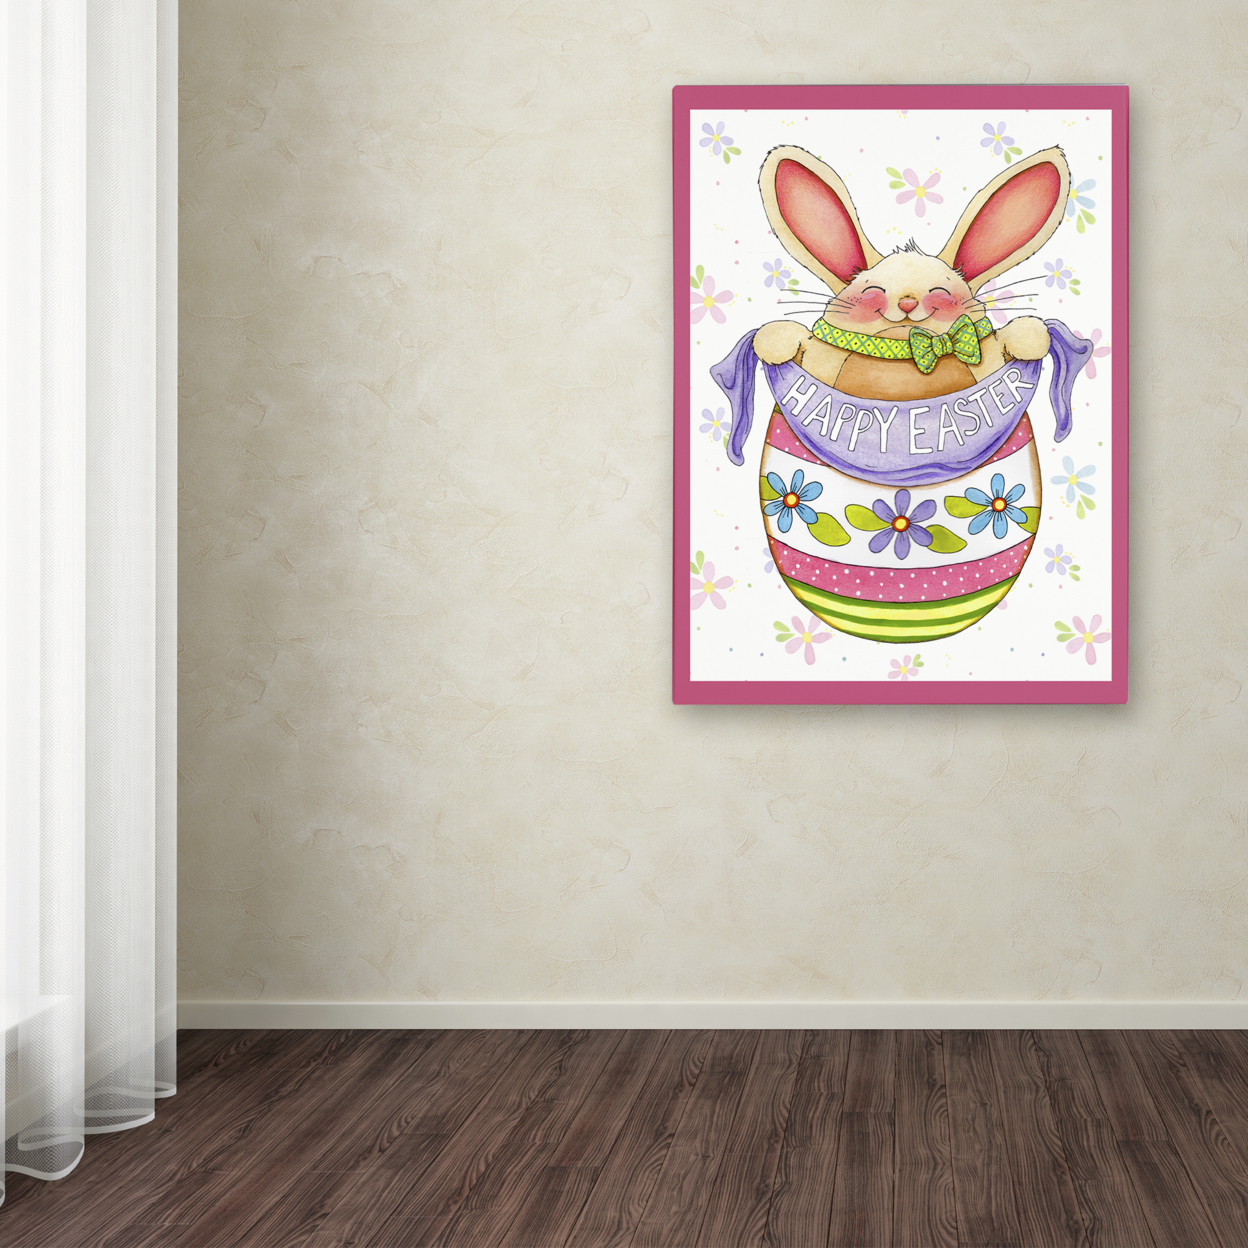 Jennifer Nilsson 'Egg Bunny' Canvas Wall Art 35 X 47 Inches